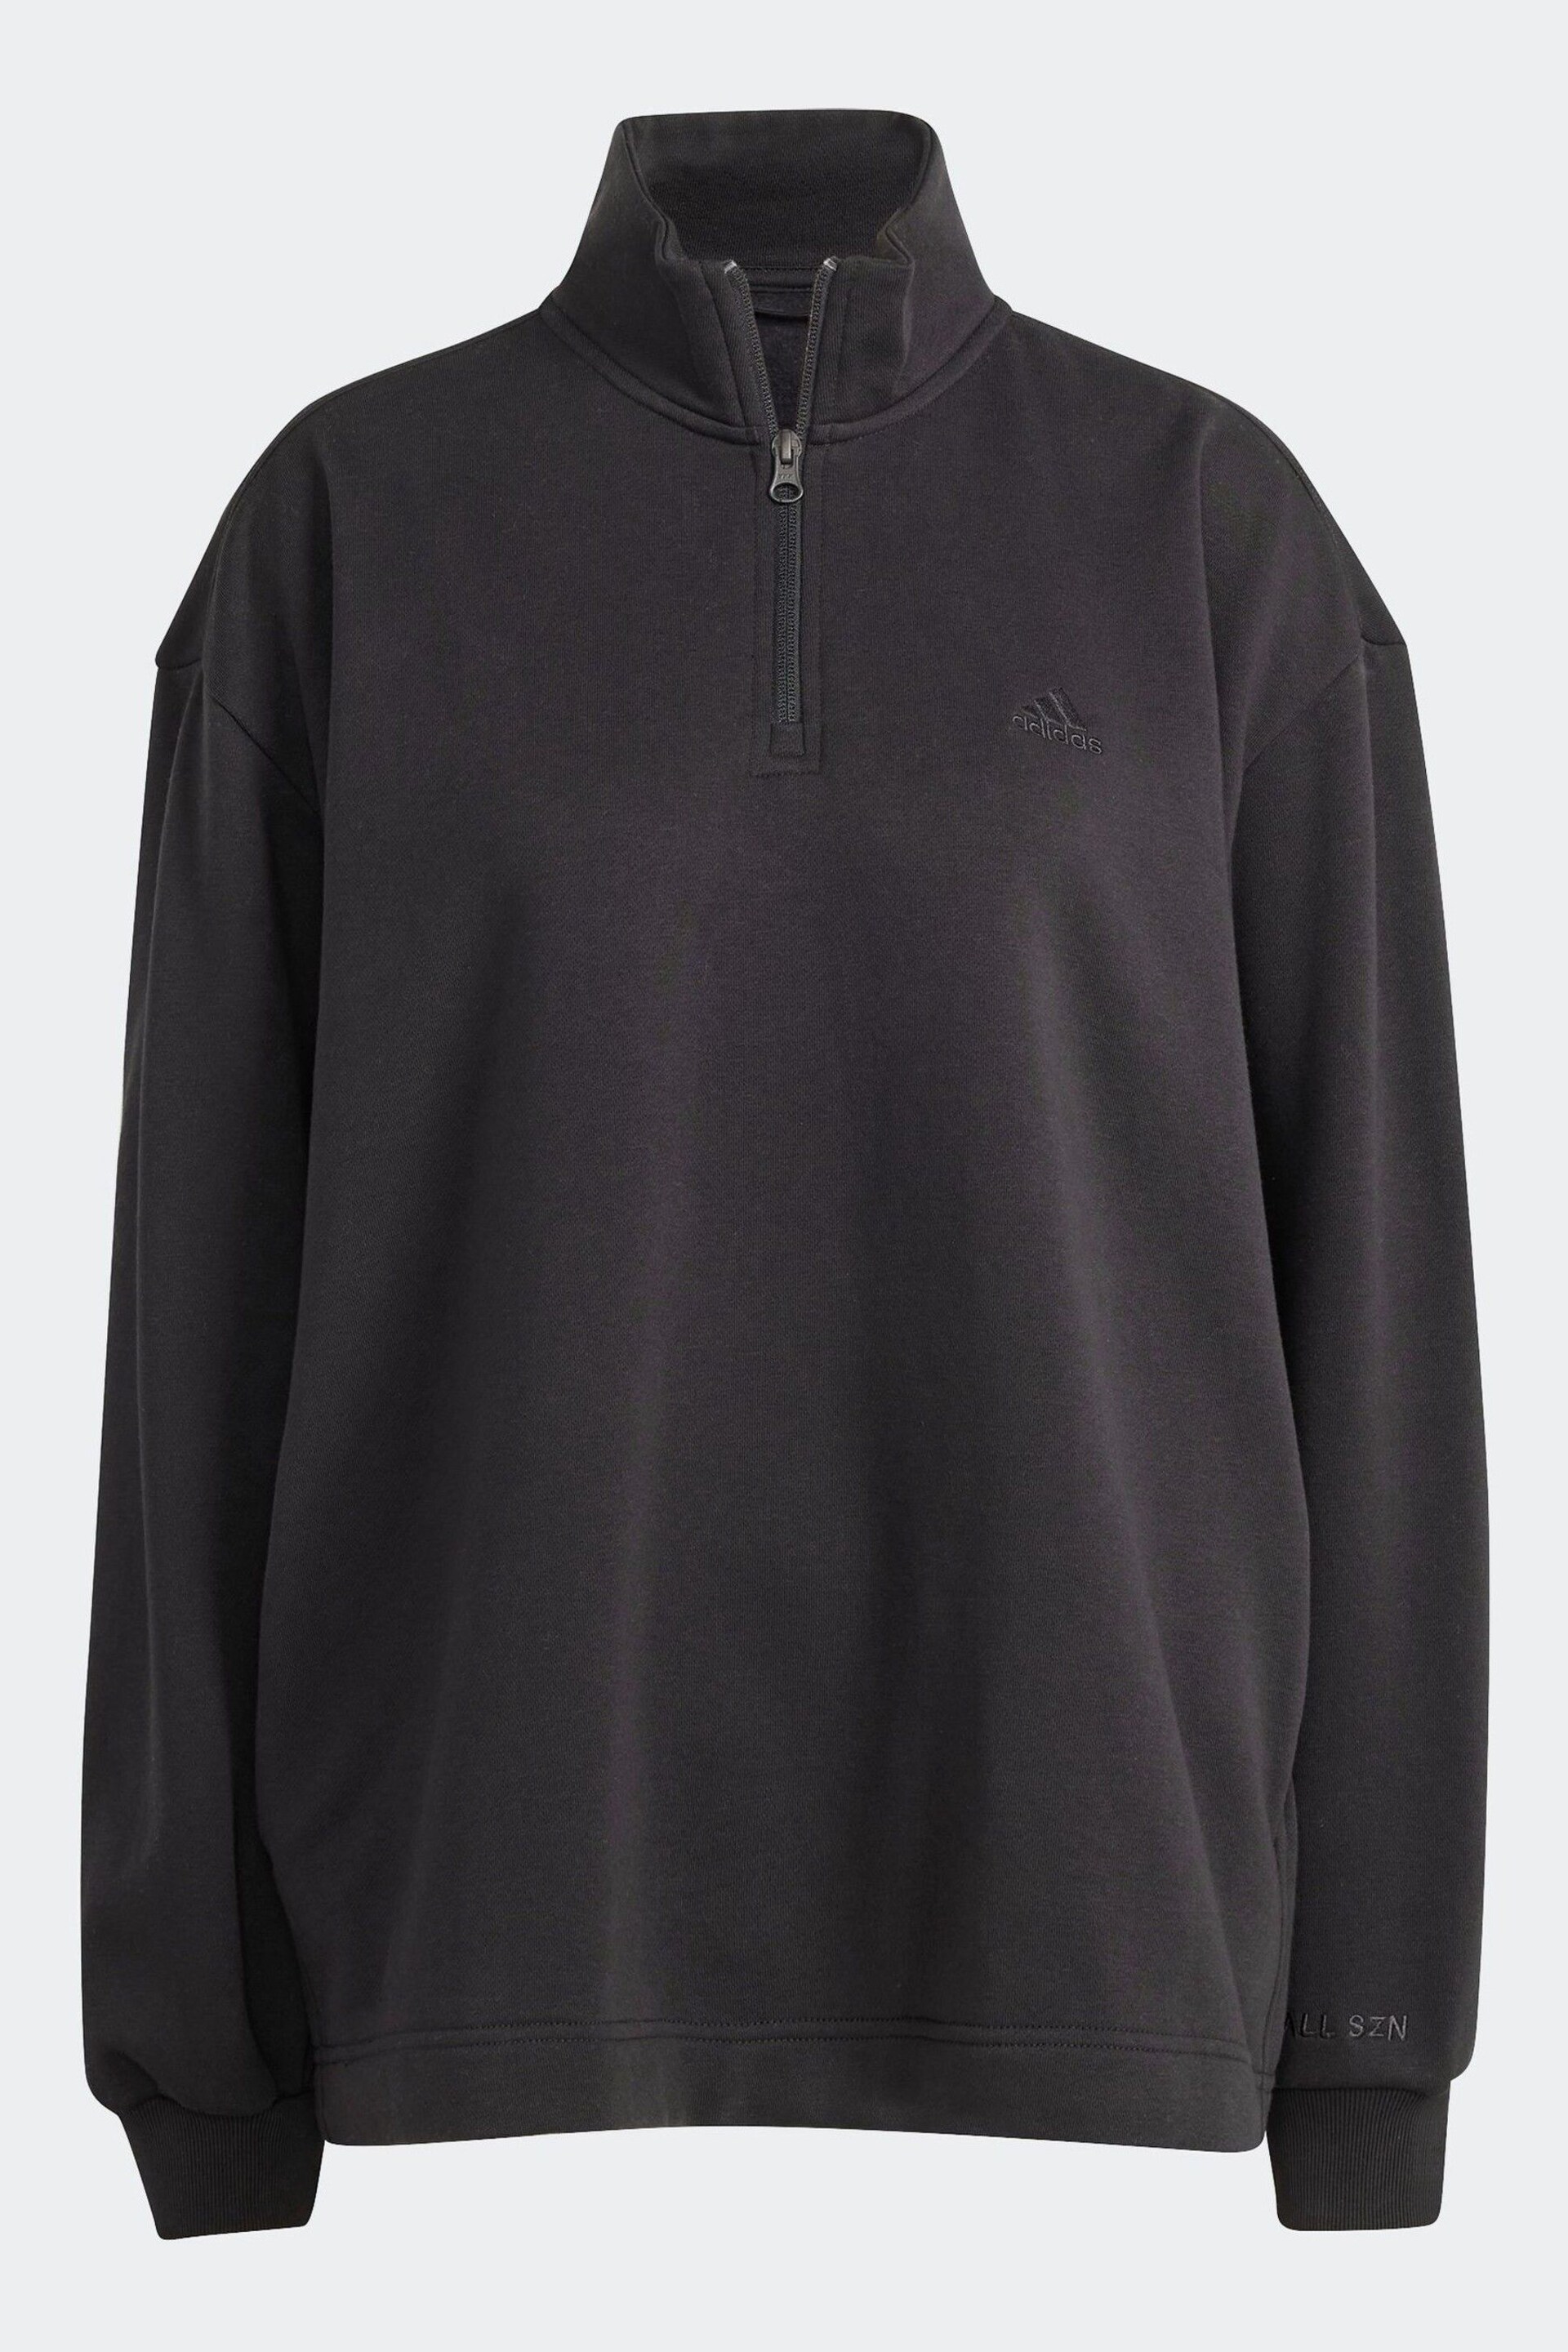 adidas Black Sportswear All Szn Fleece Quarter Zip Sweatshirt - Image 7 of 7